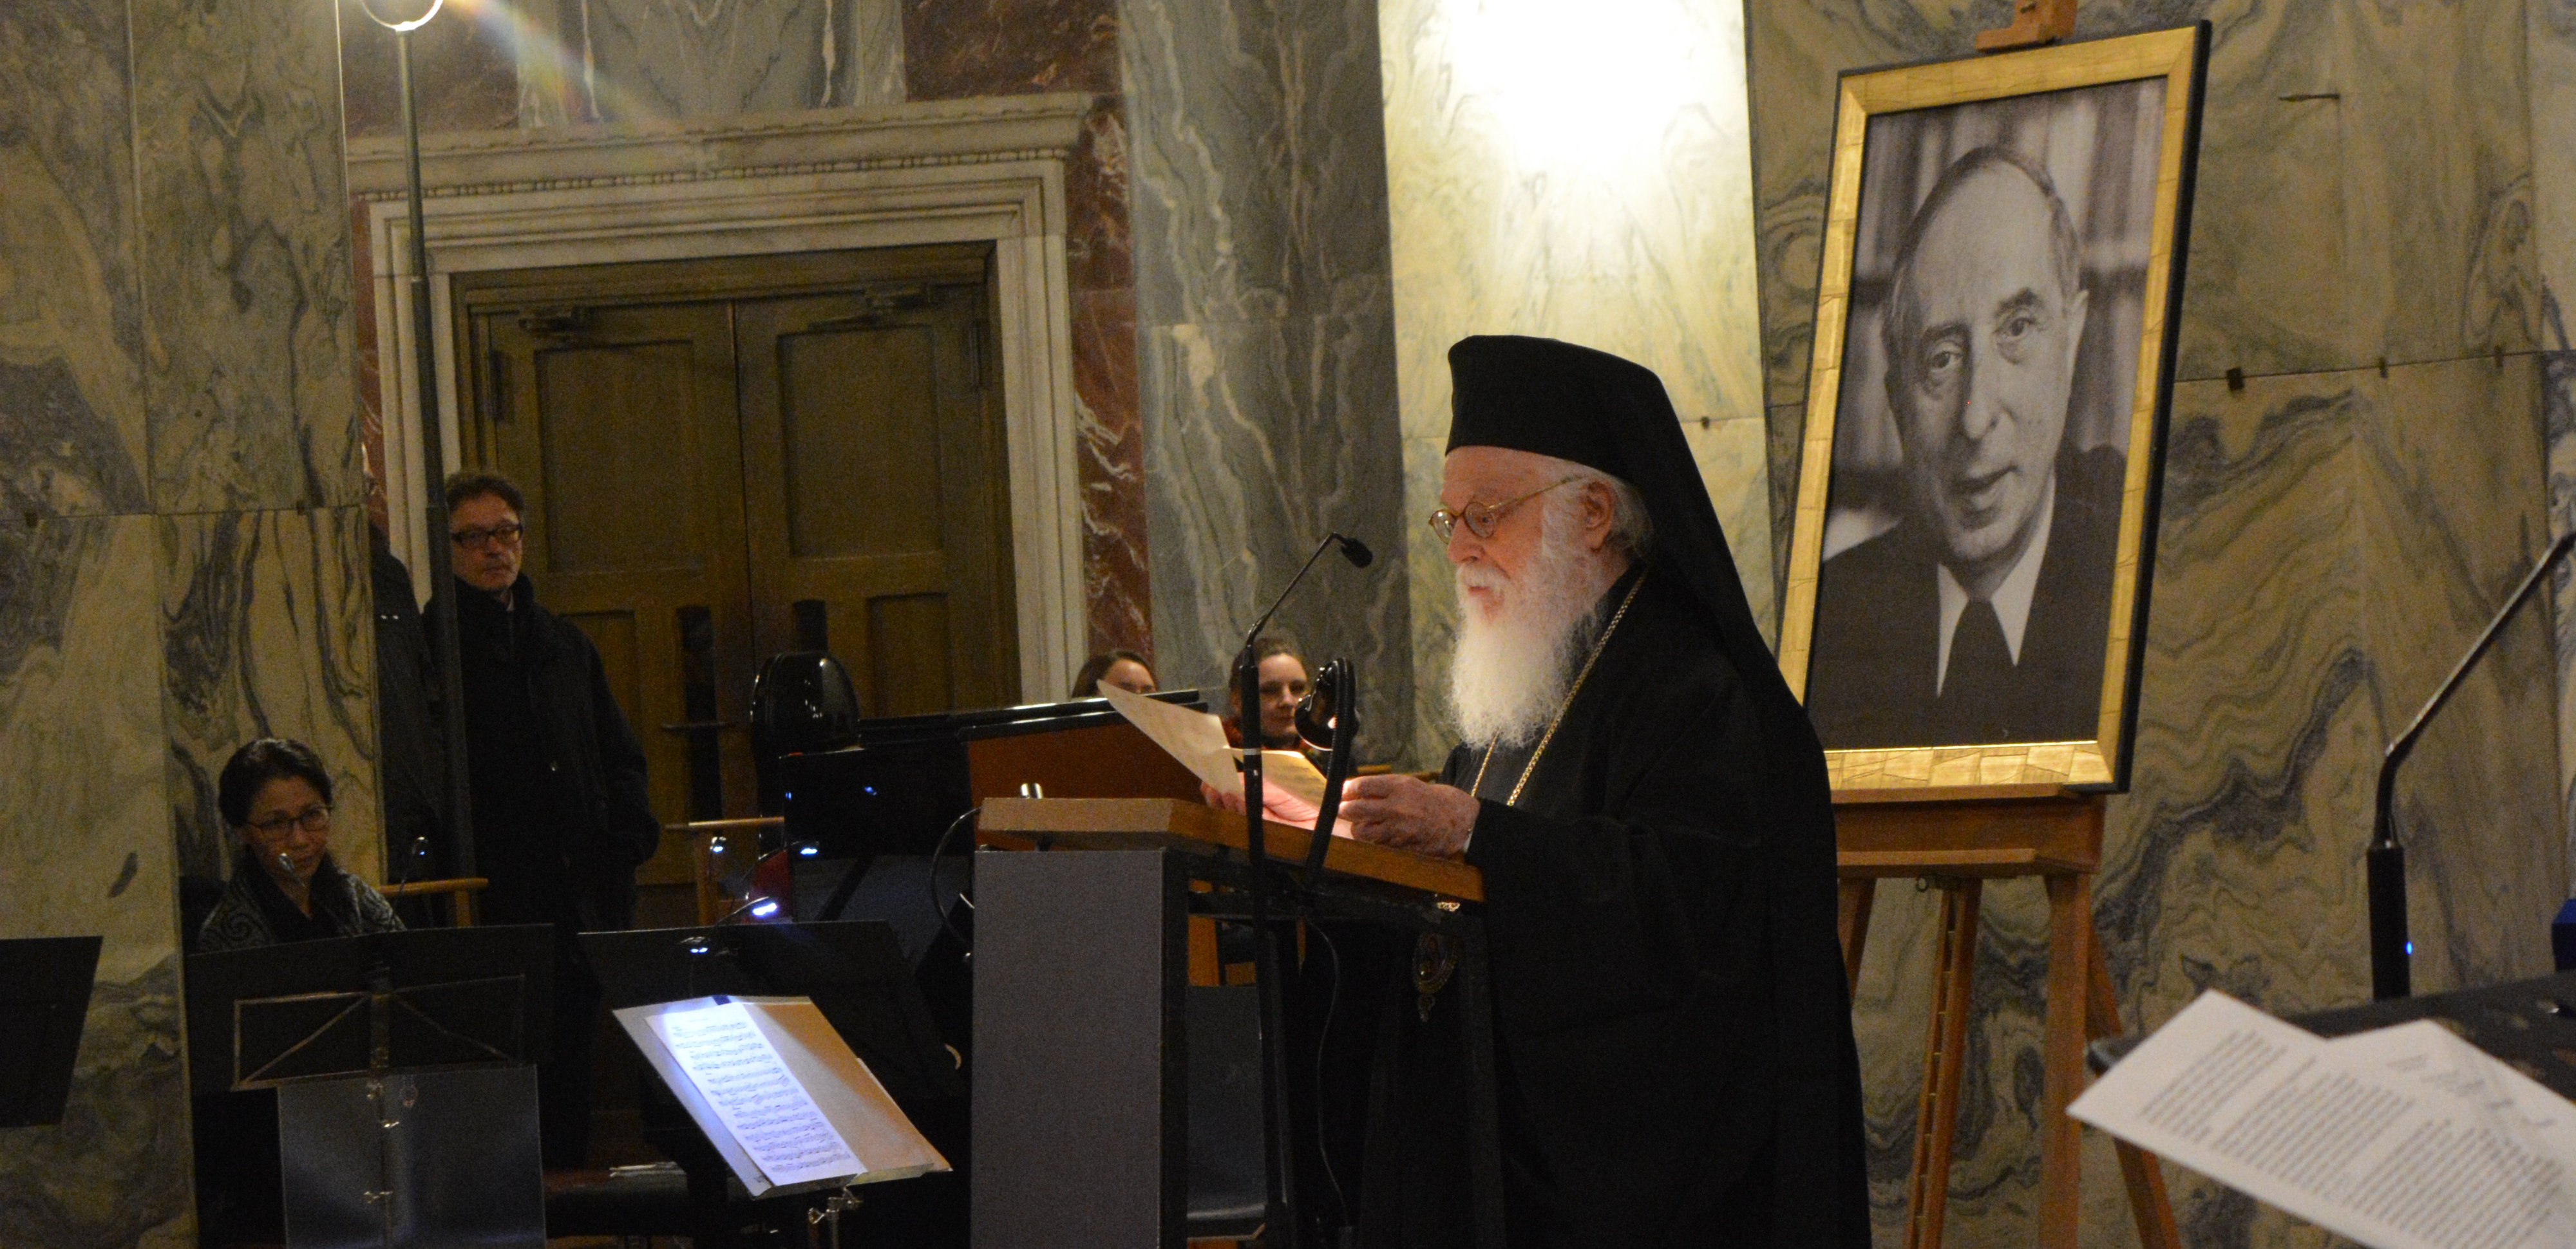 Archbishop Anastasios during his speech